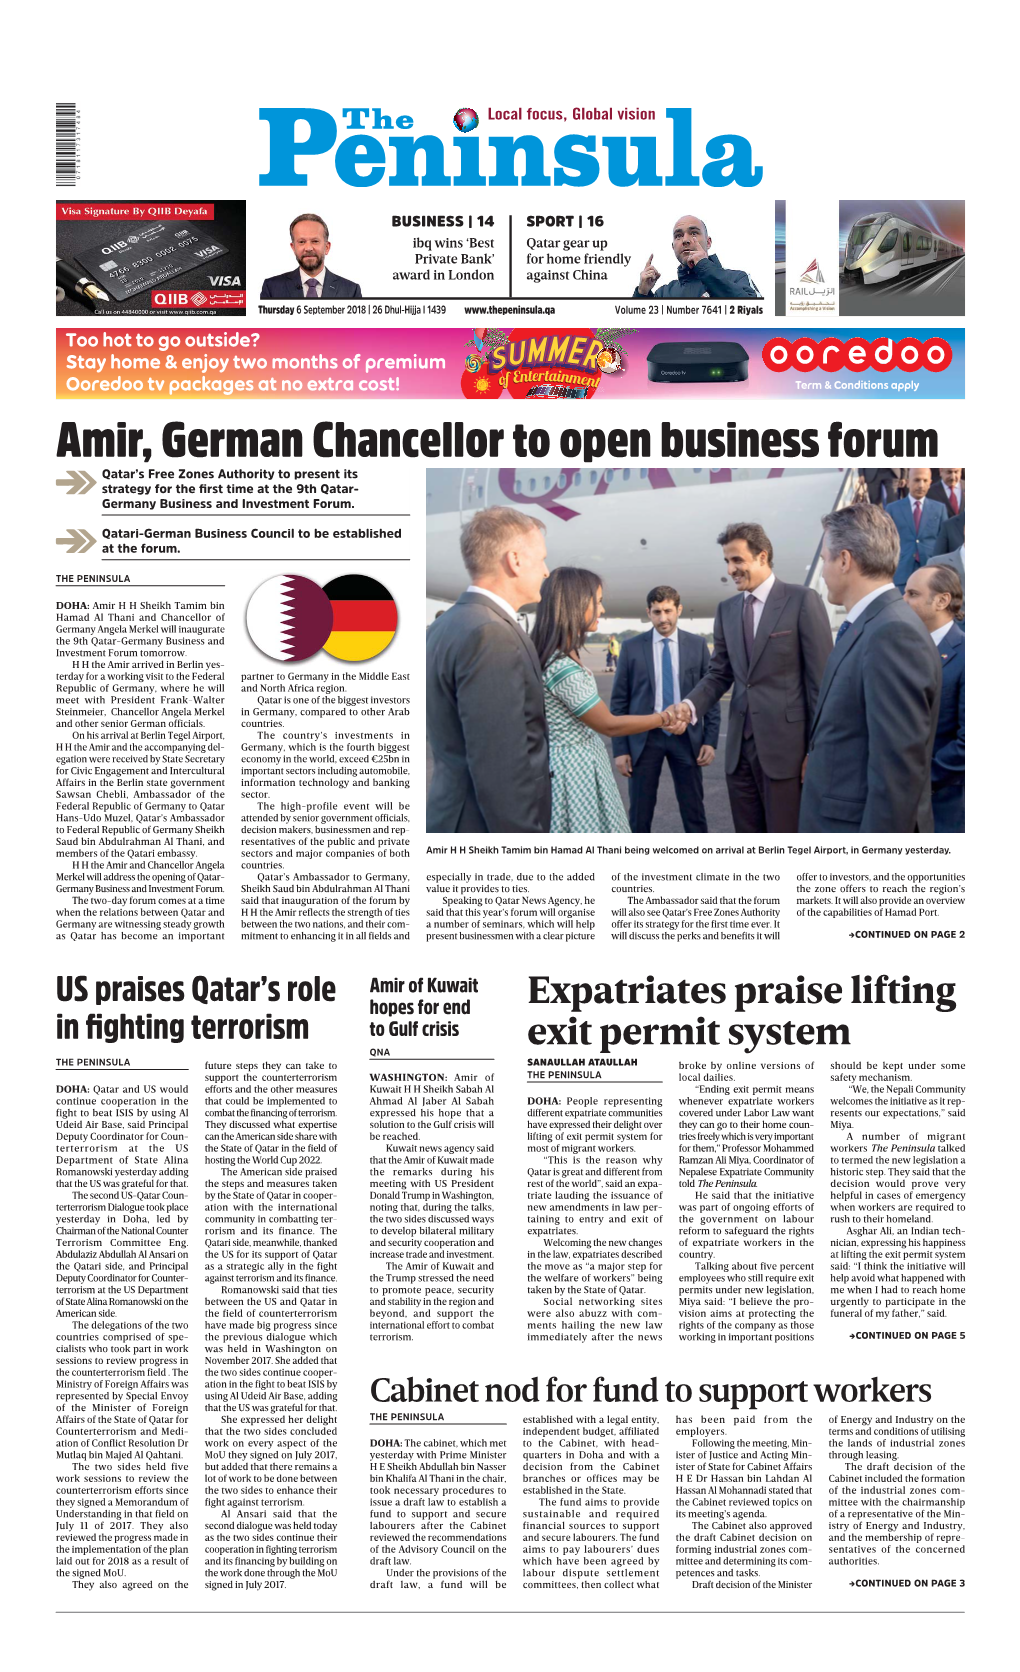 Amir, German Chancellor to Open Business Forum